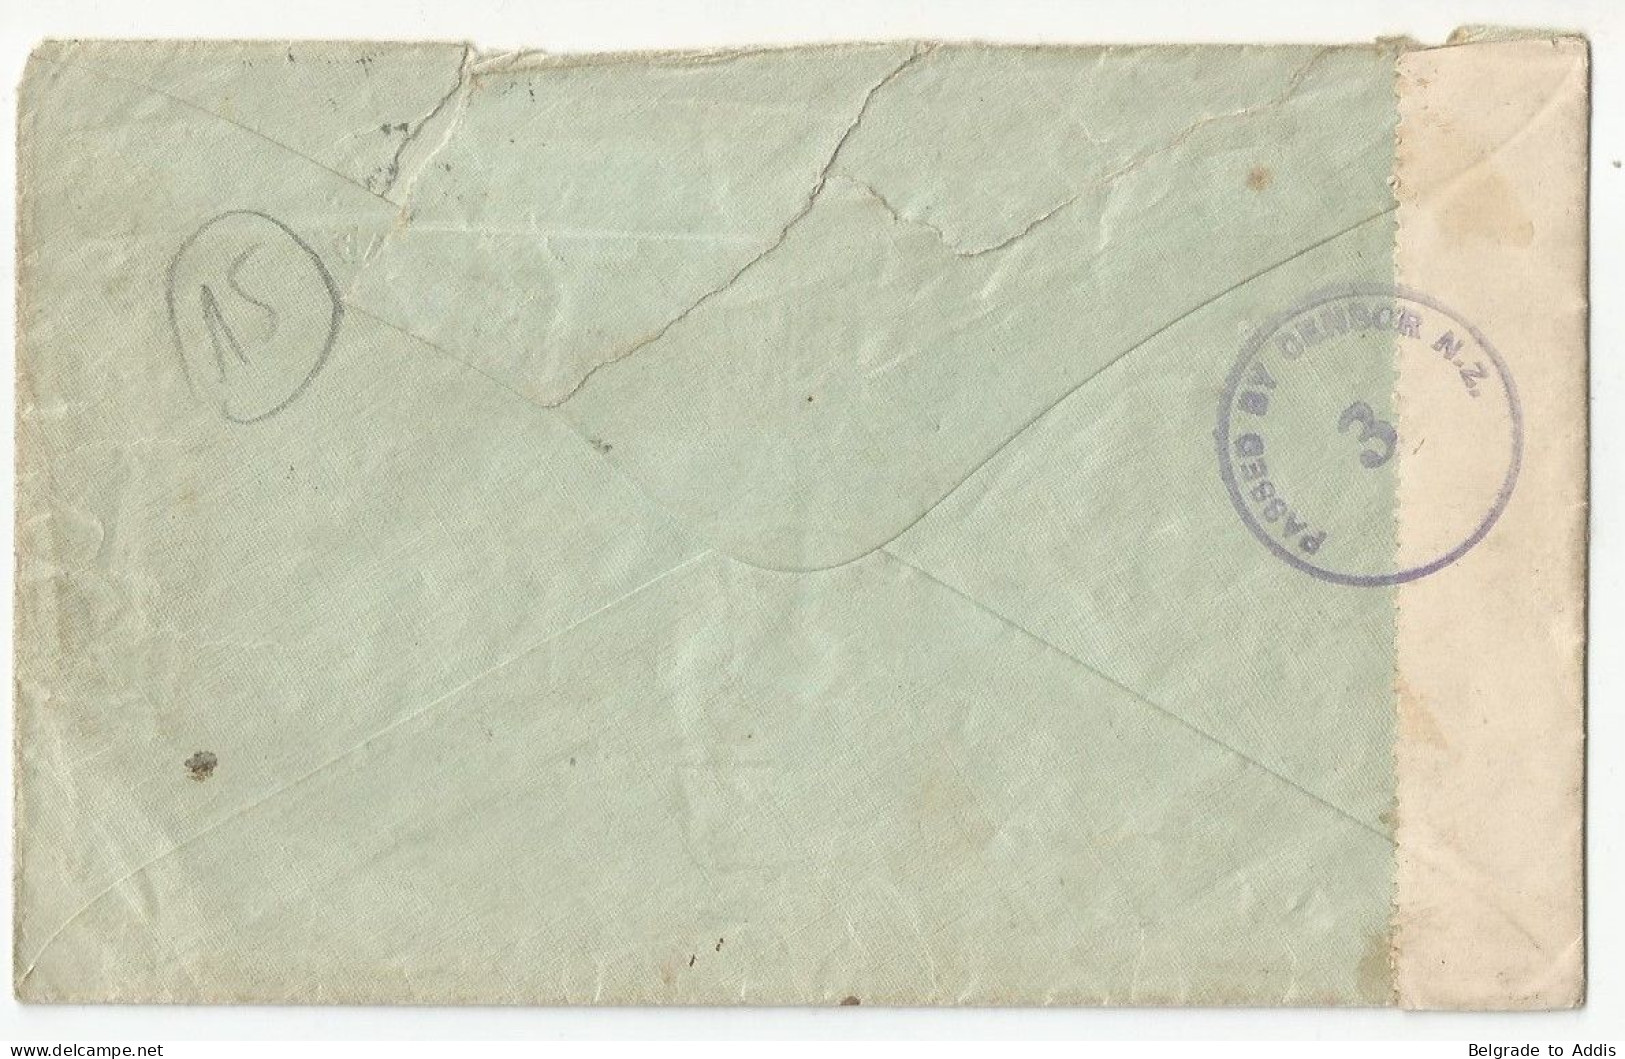 New Zealand Australia England  Inaugural Flight Air Mail Censored Cover 1940 Great Britain - Posta Aerea